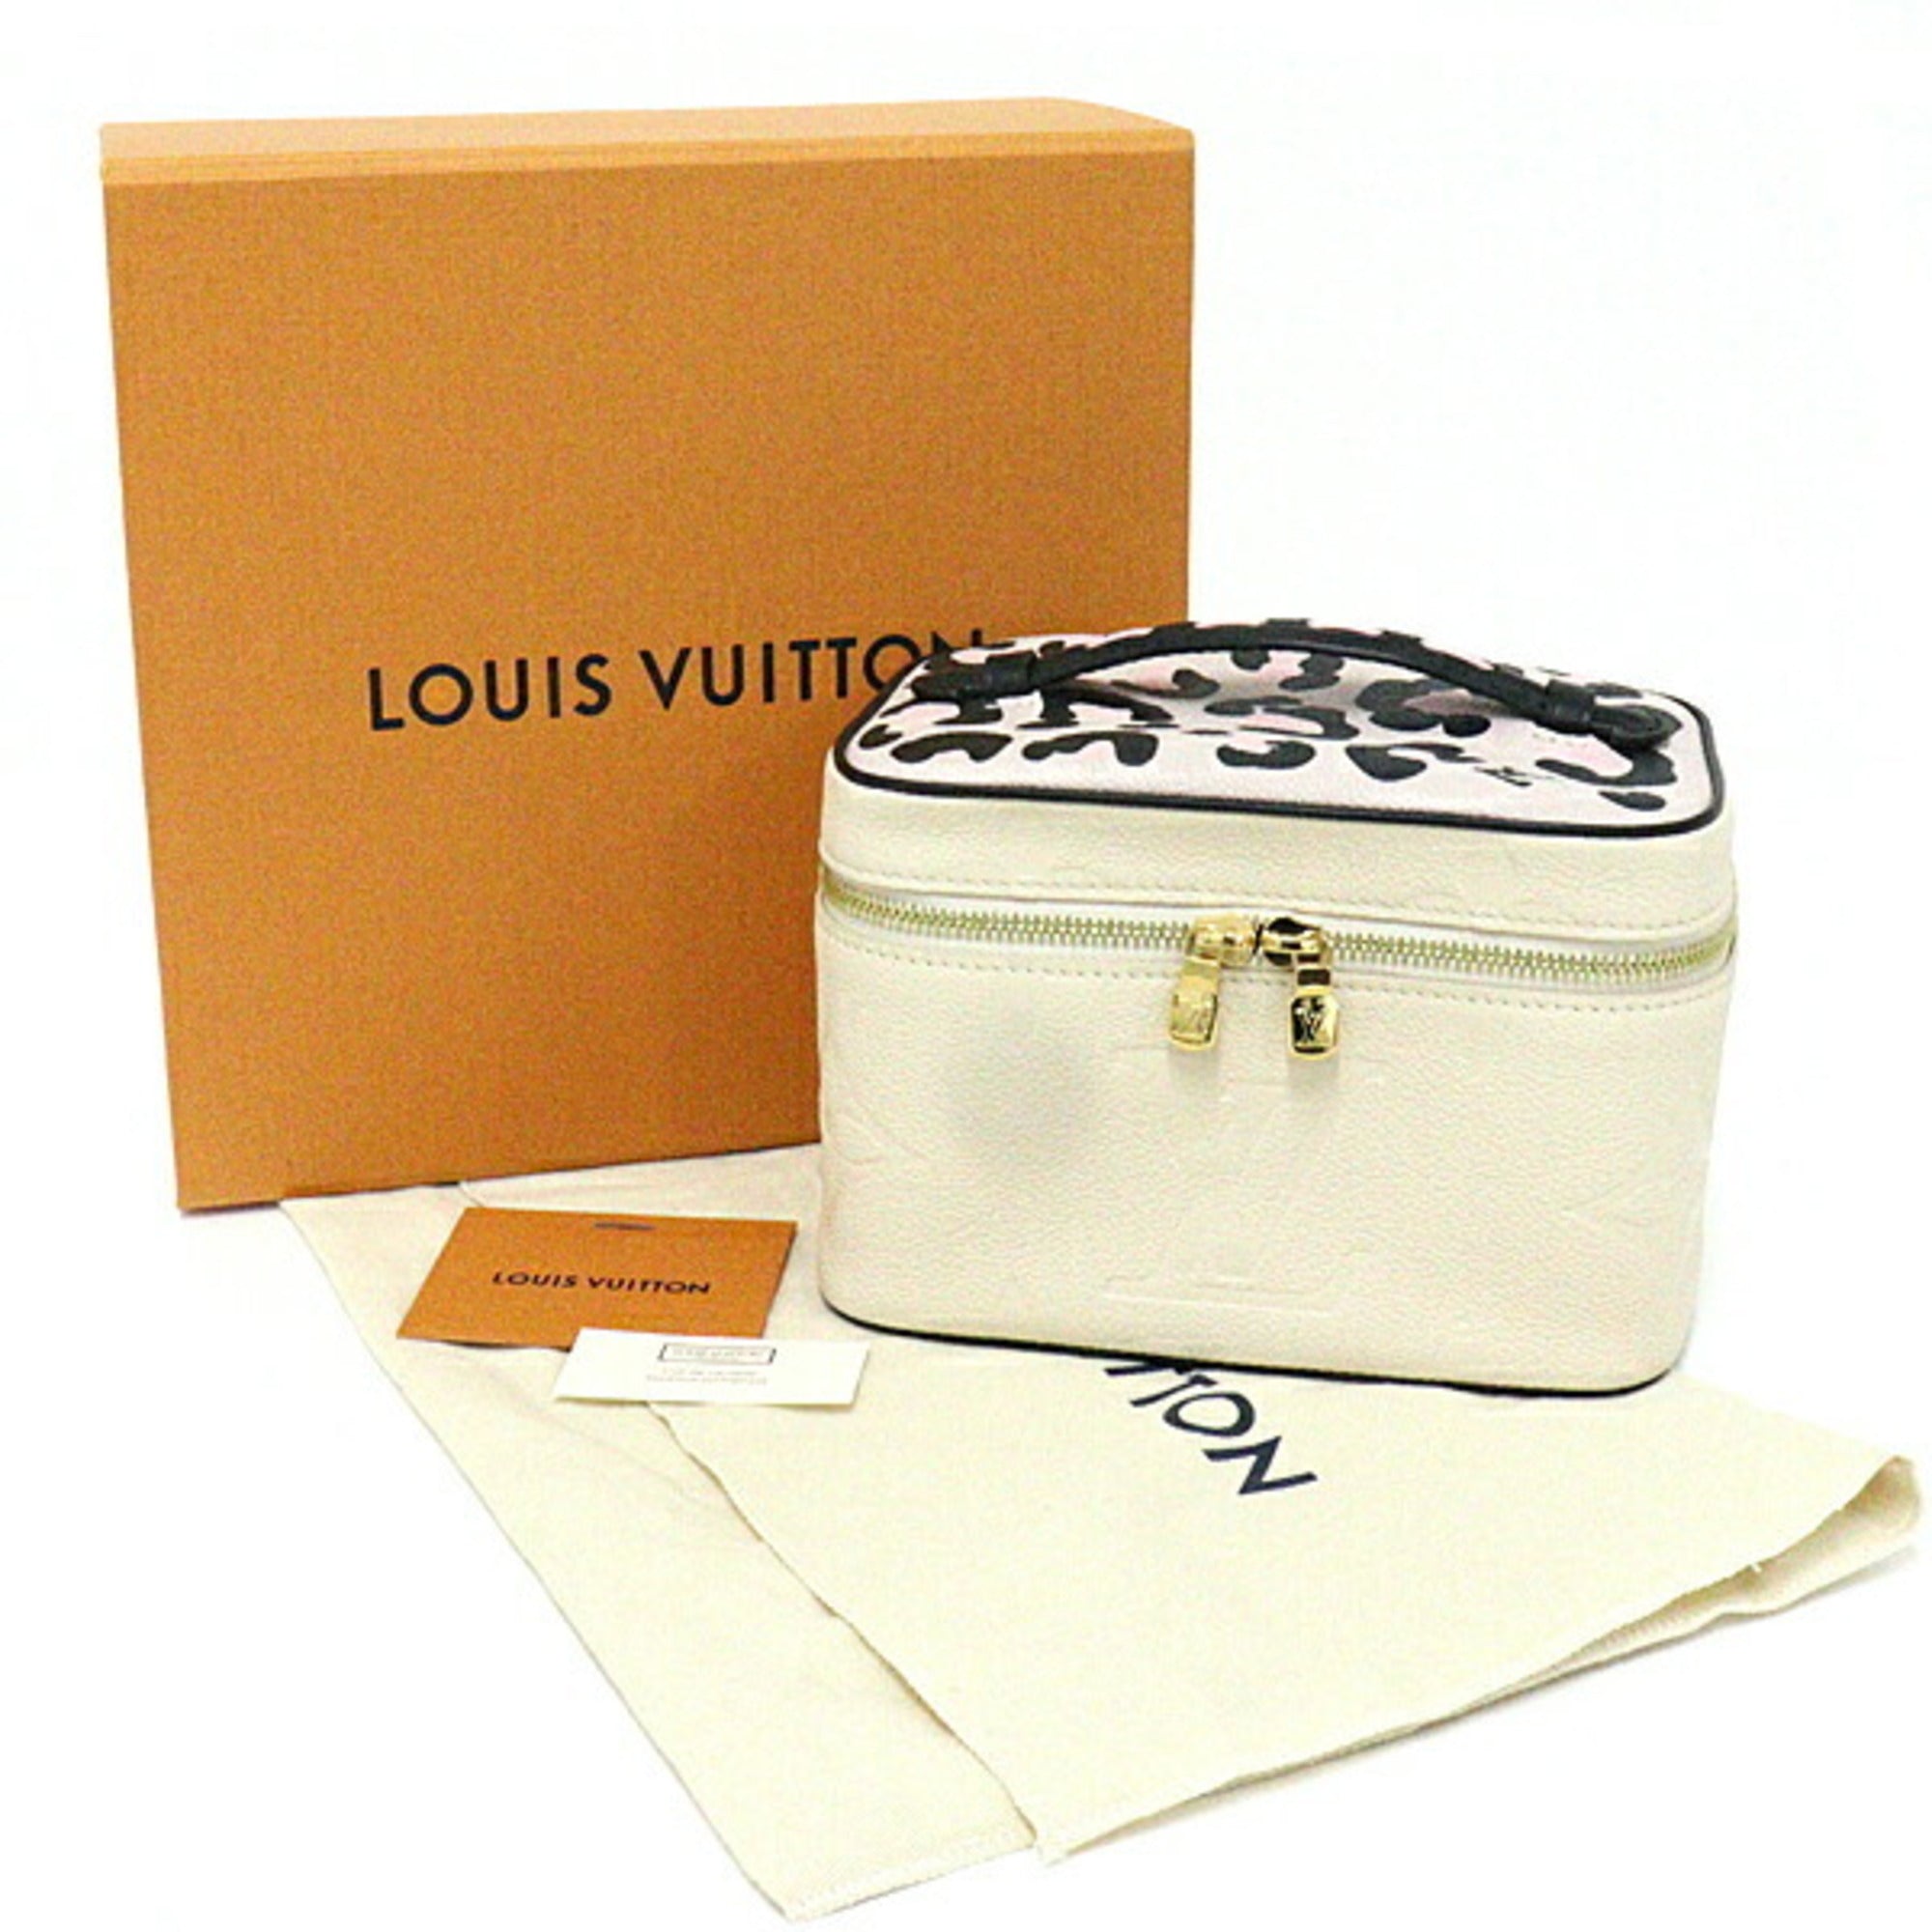 Authenticated Used LOUIS VUITTON Louis Vuitton Monogram Implant